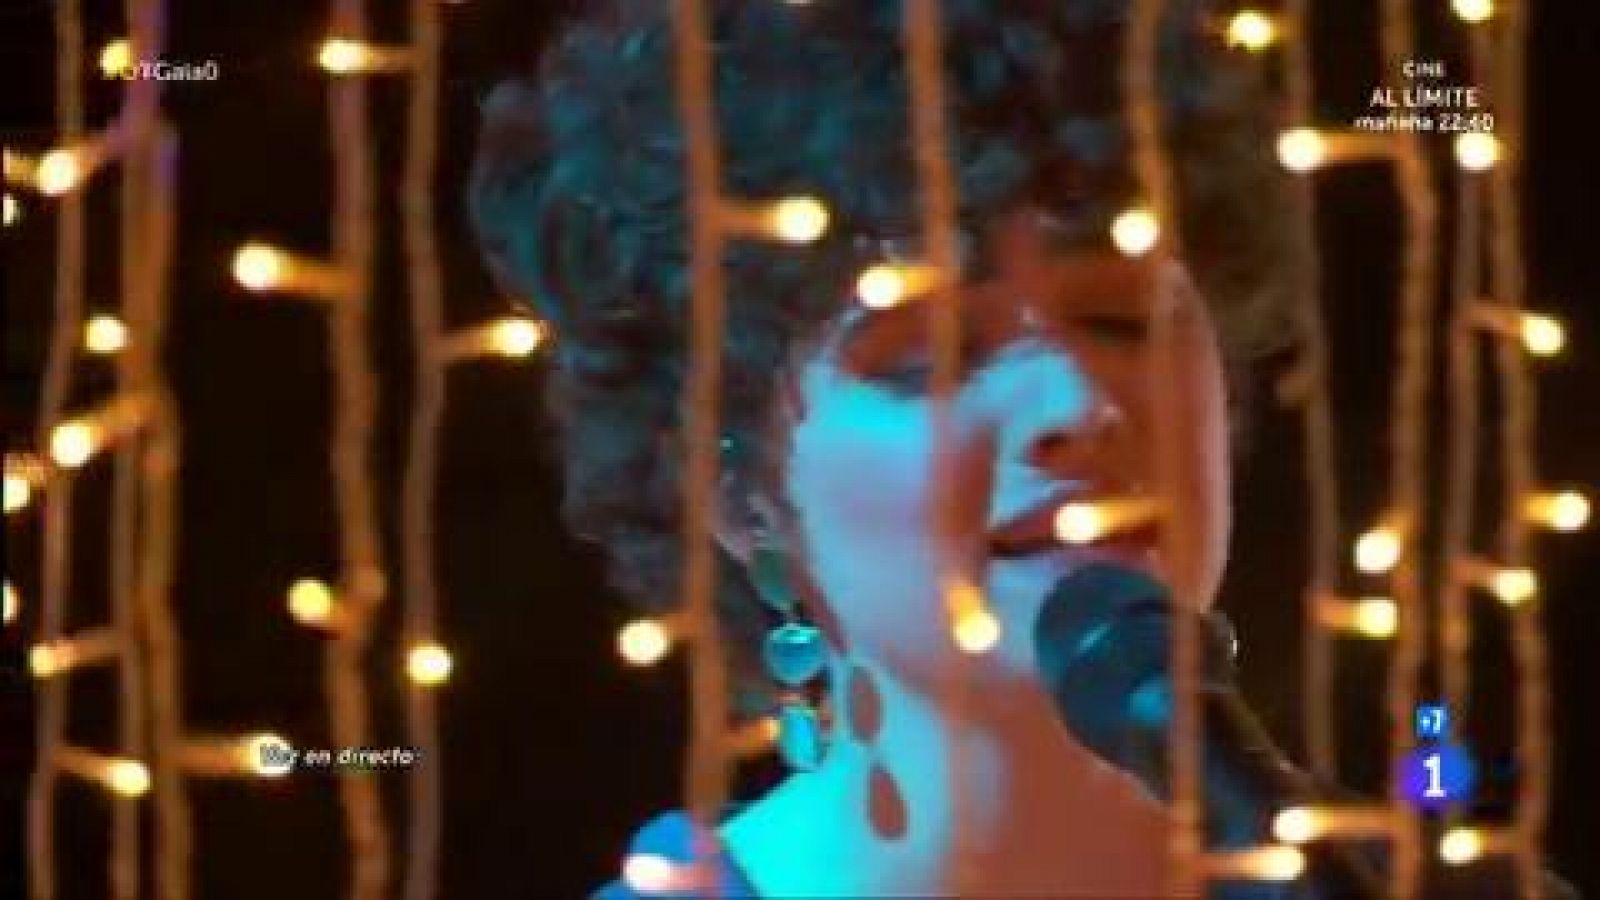 Anne canta "Moon river" en la Gala 0 de OT 2020